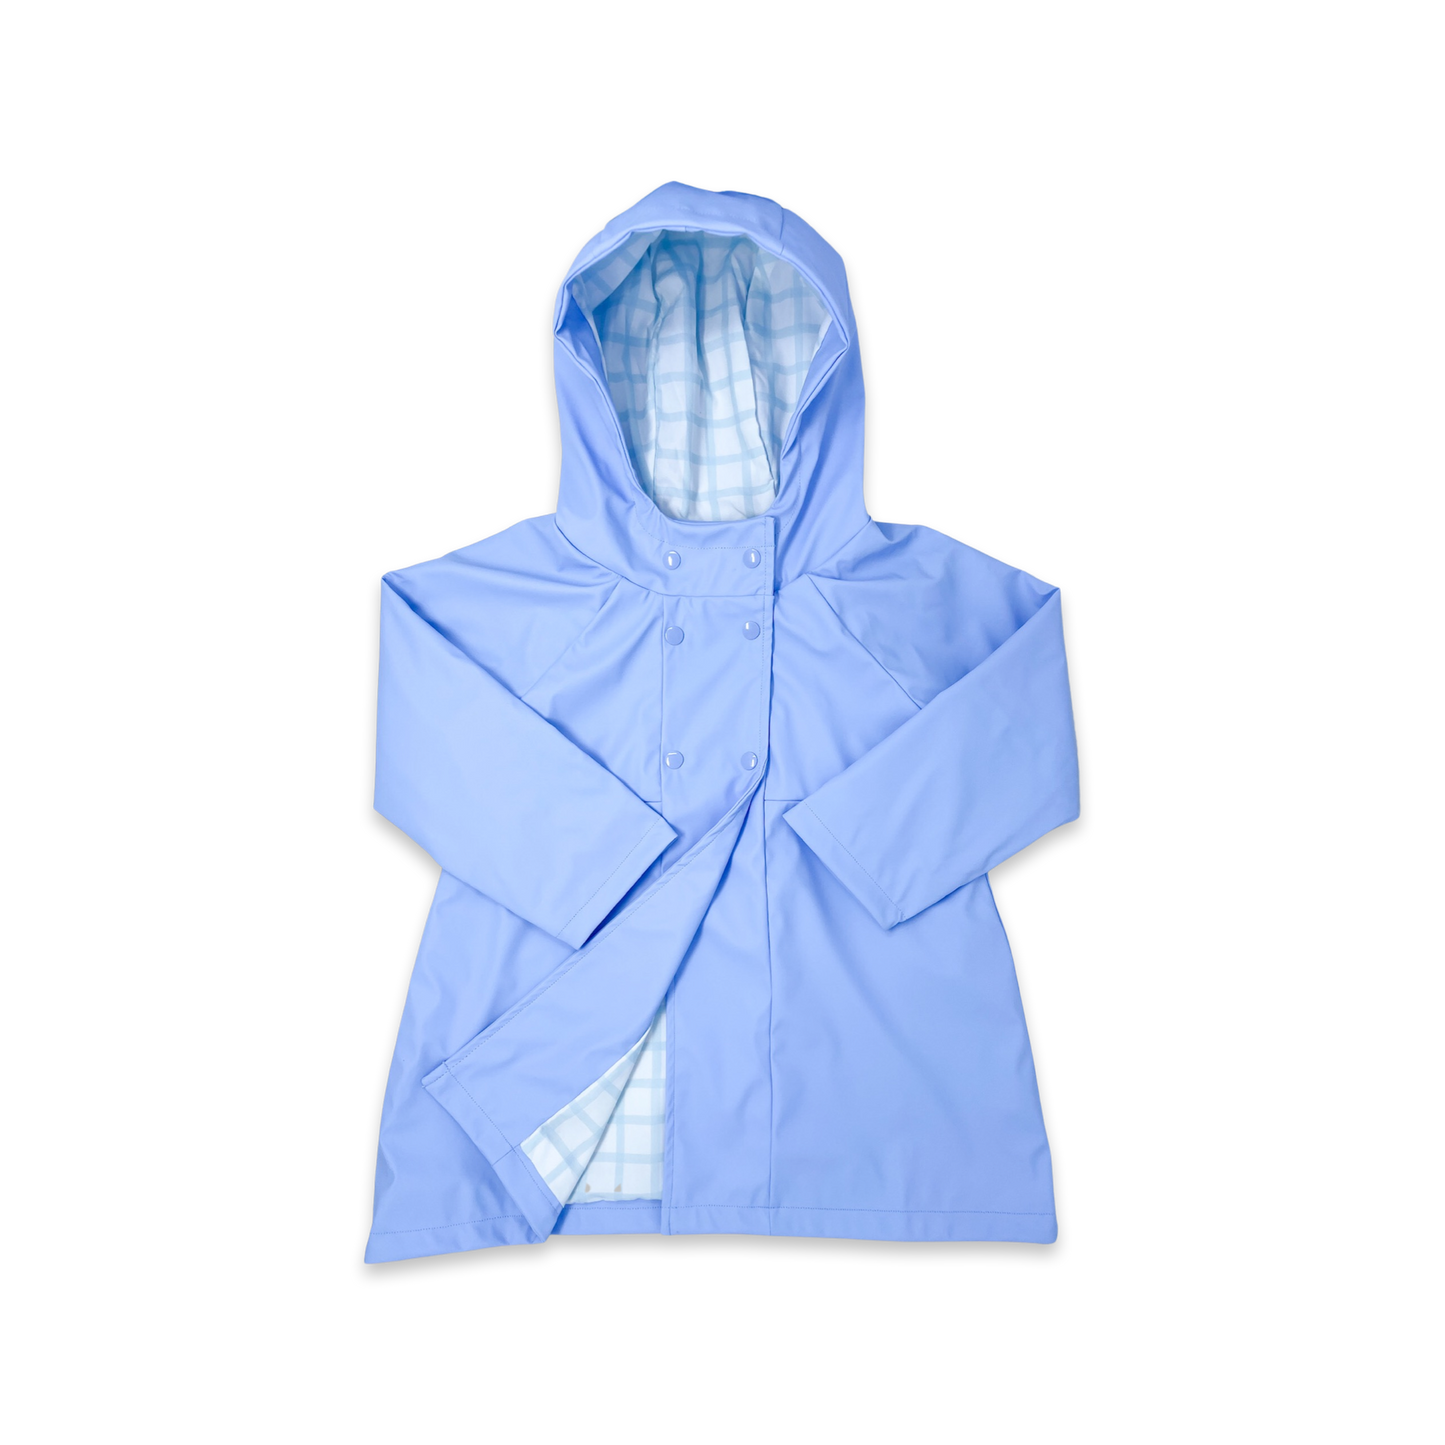 Rainy Day Raincoat - Blue, Whales Blue Windowpane